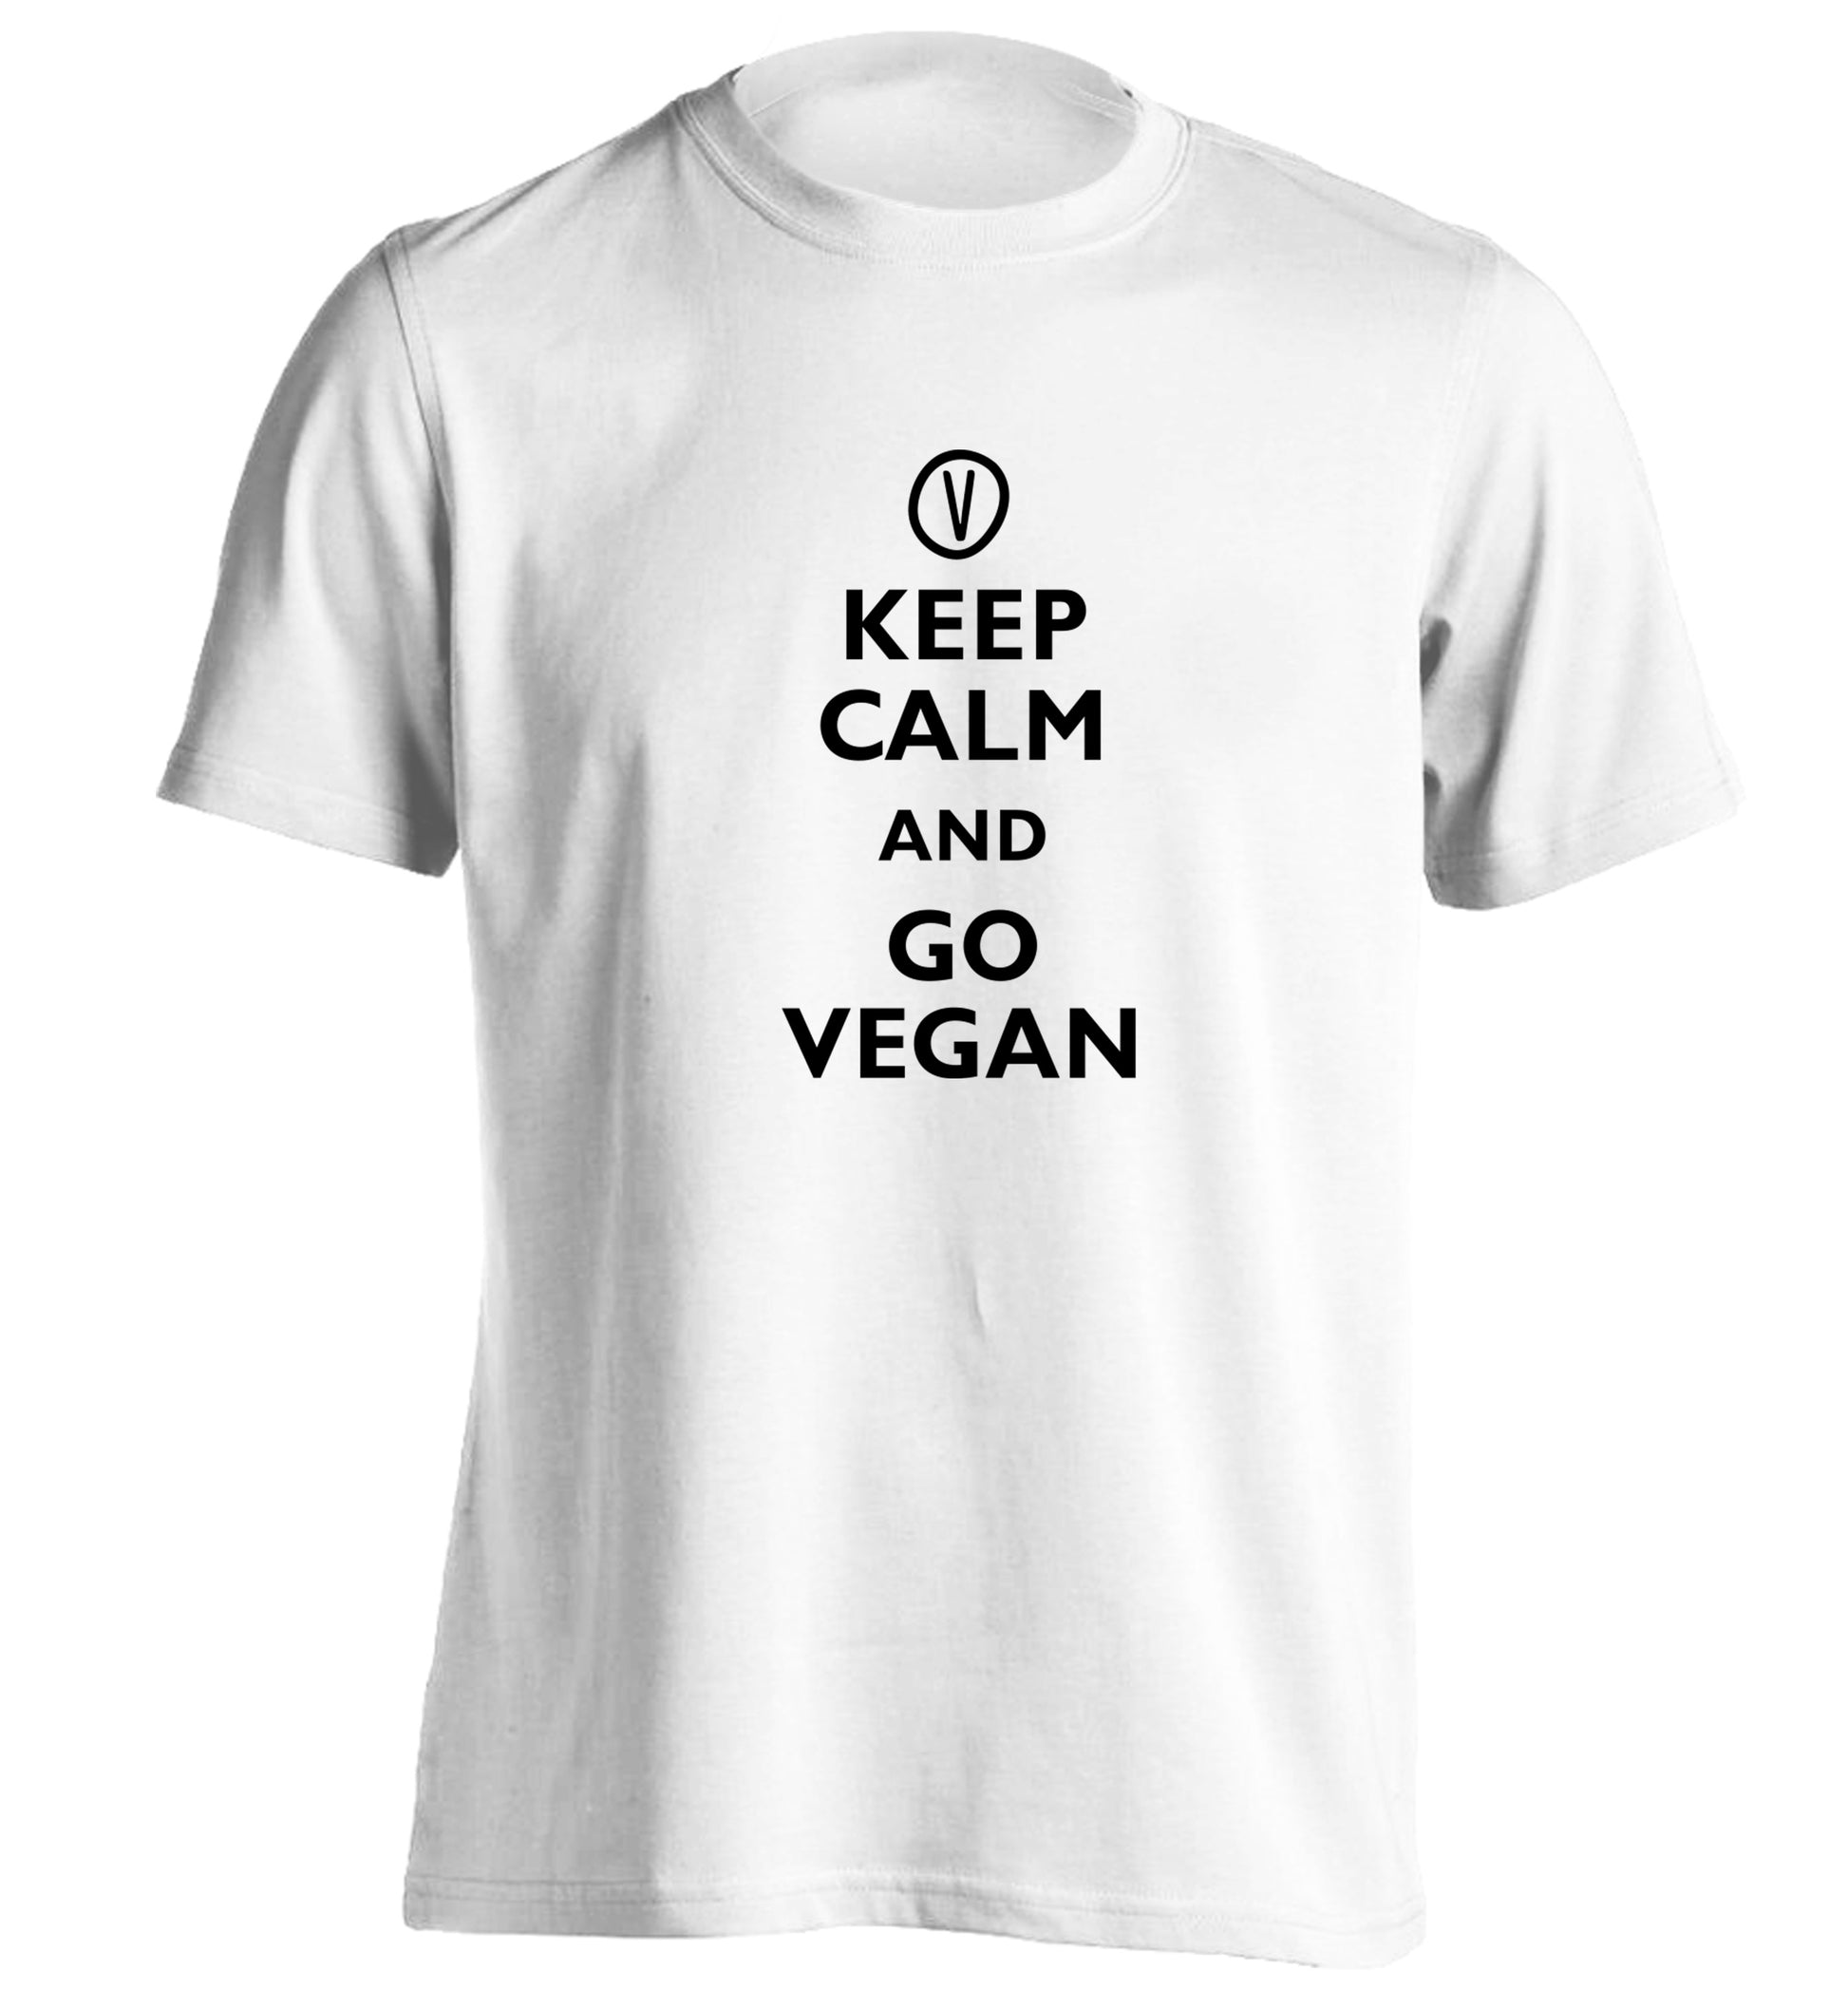 Keep calm and go vegan adults unisex white Tshirt 2XL